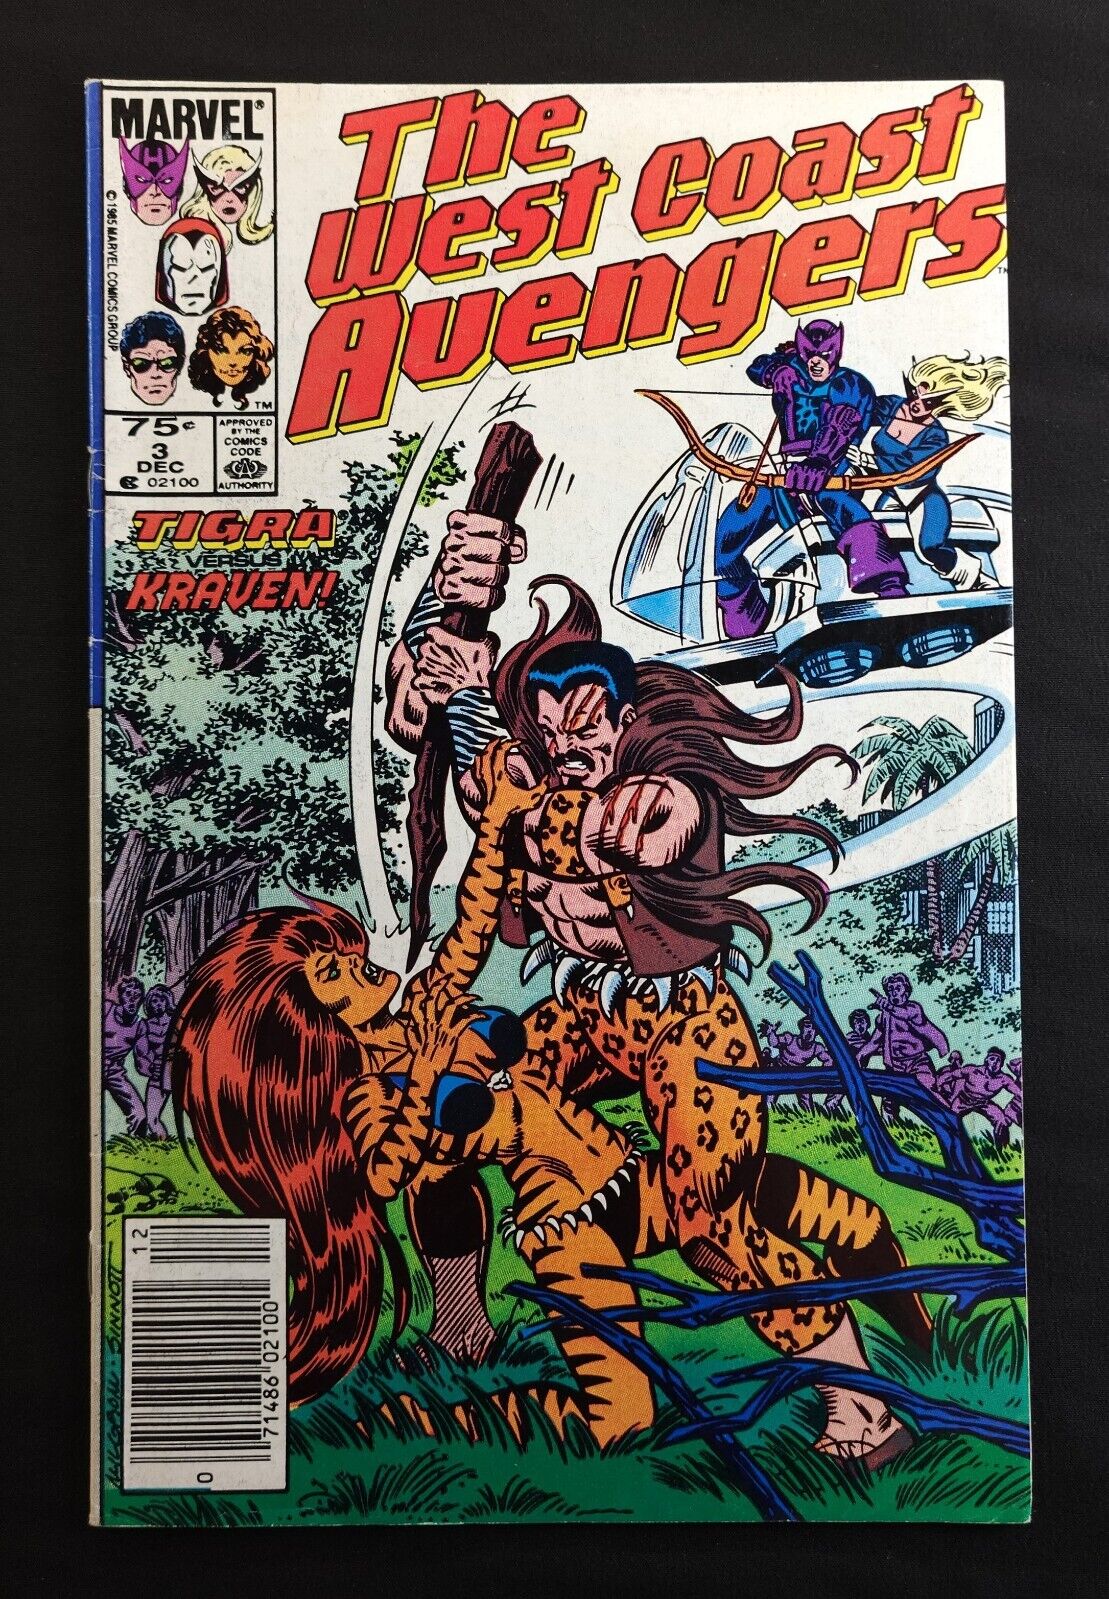 West Coast Avengers #3 (Marvel, Dec 1985)